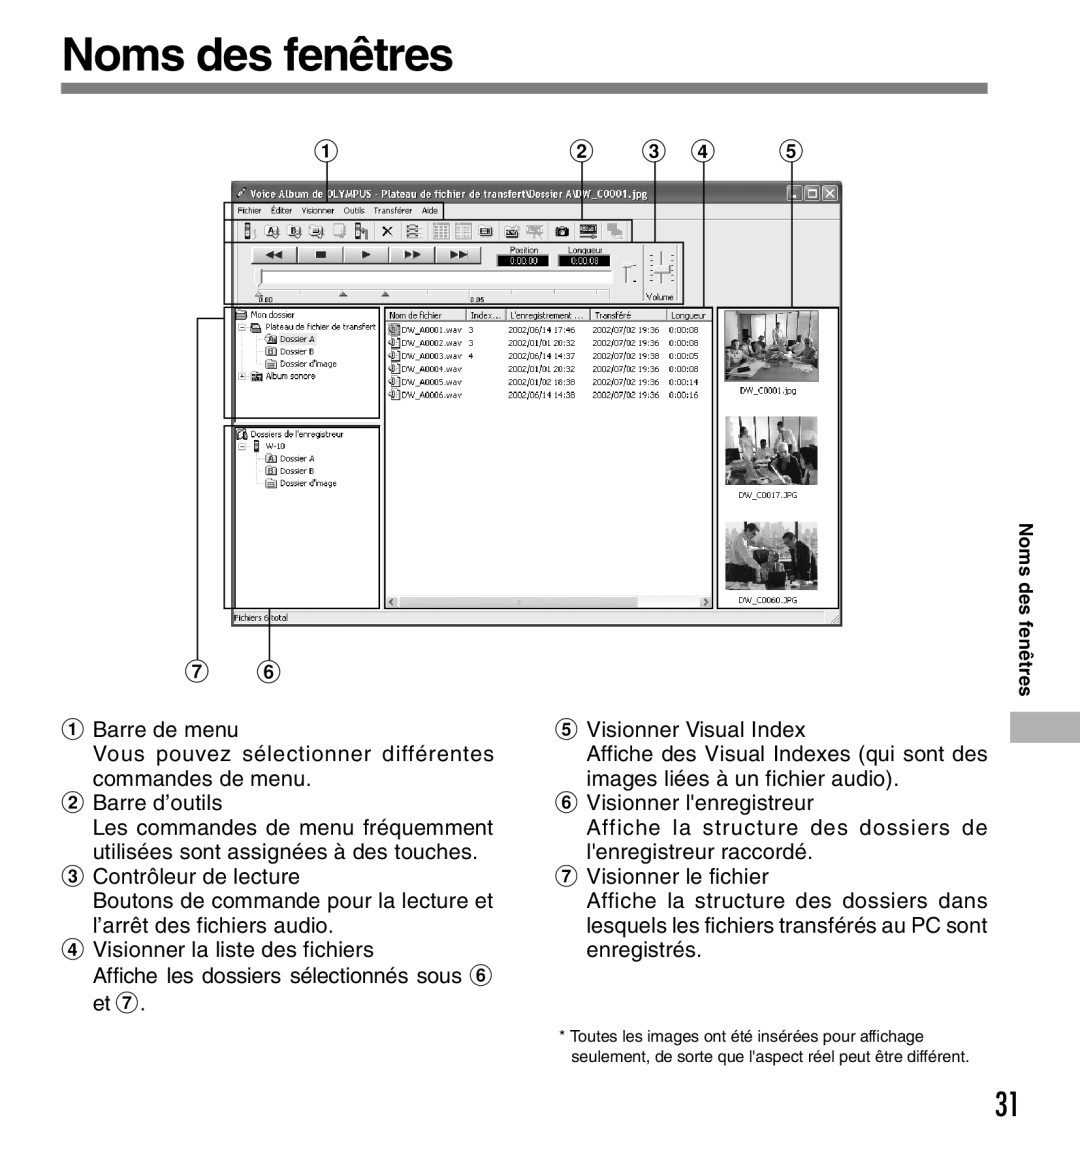 Olympus W-10 manual Noms des fenêtres, Noms des fenê tres 